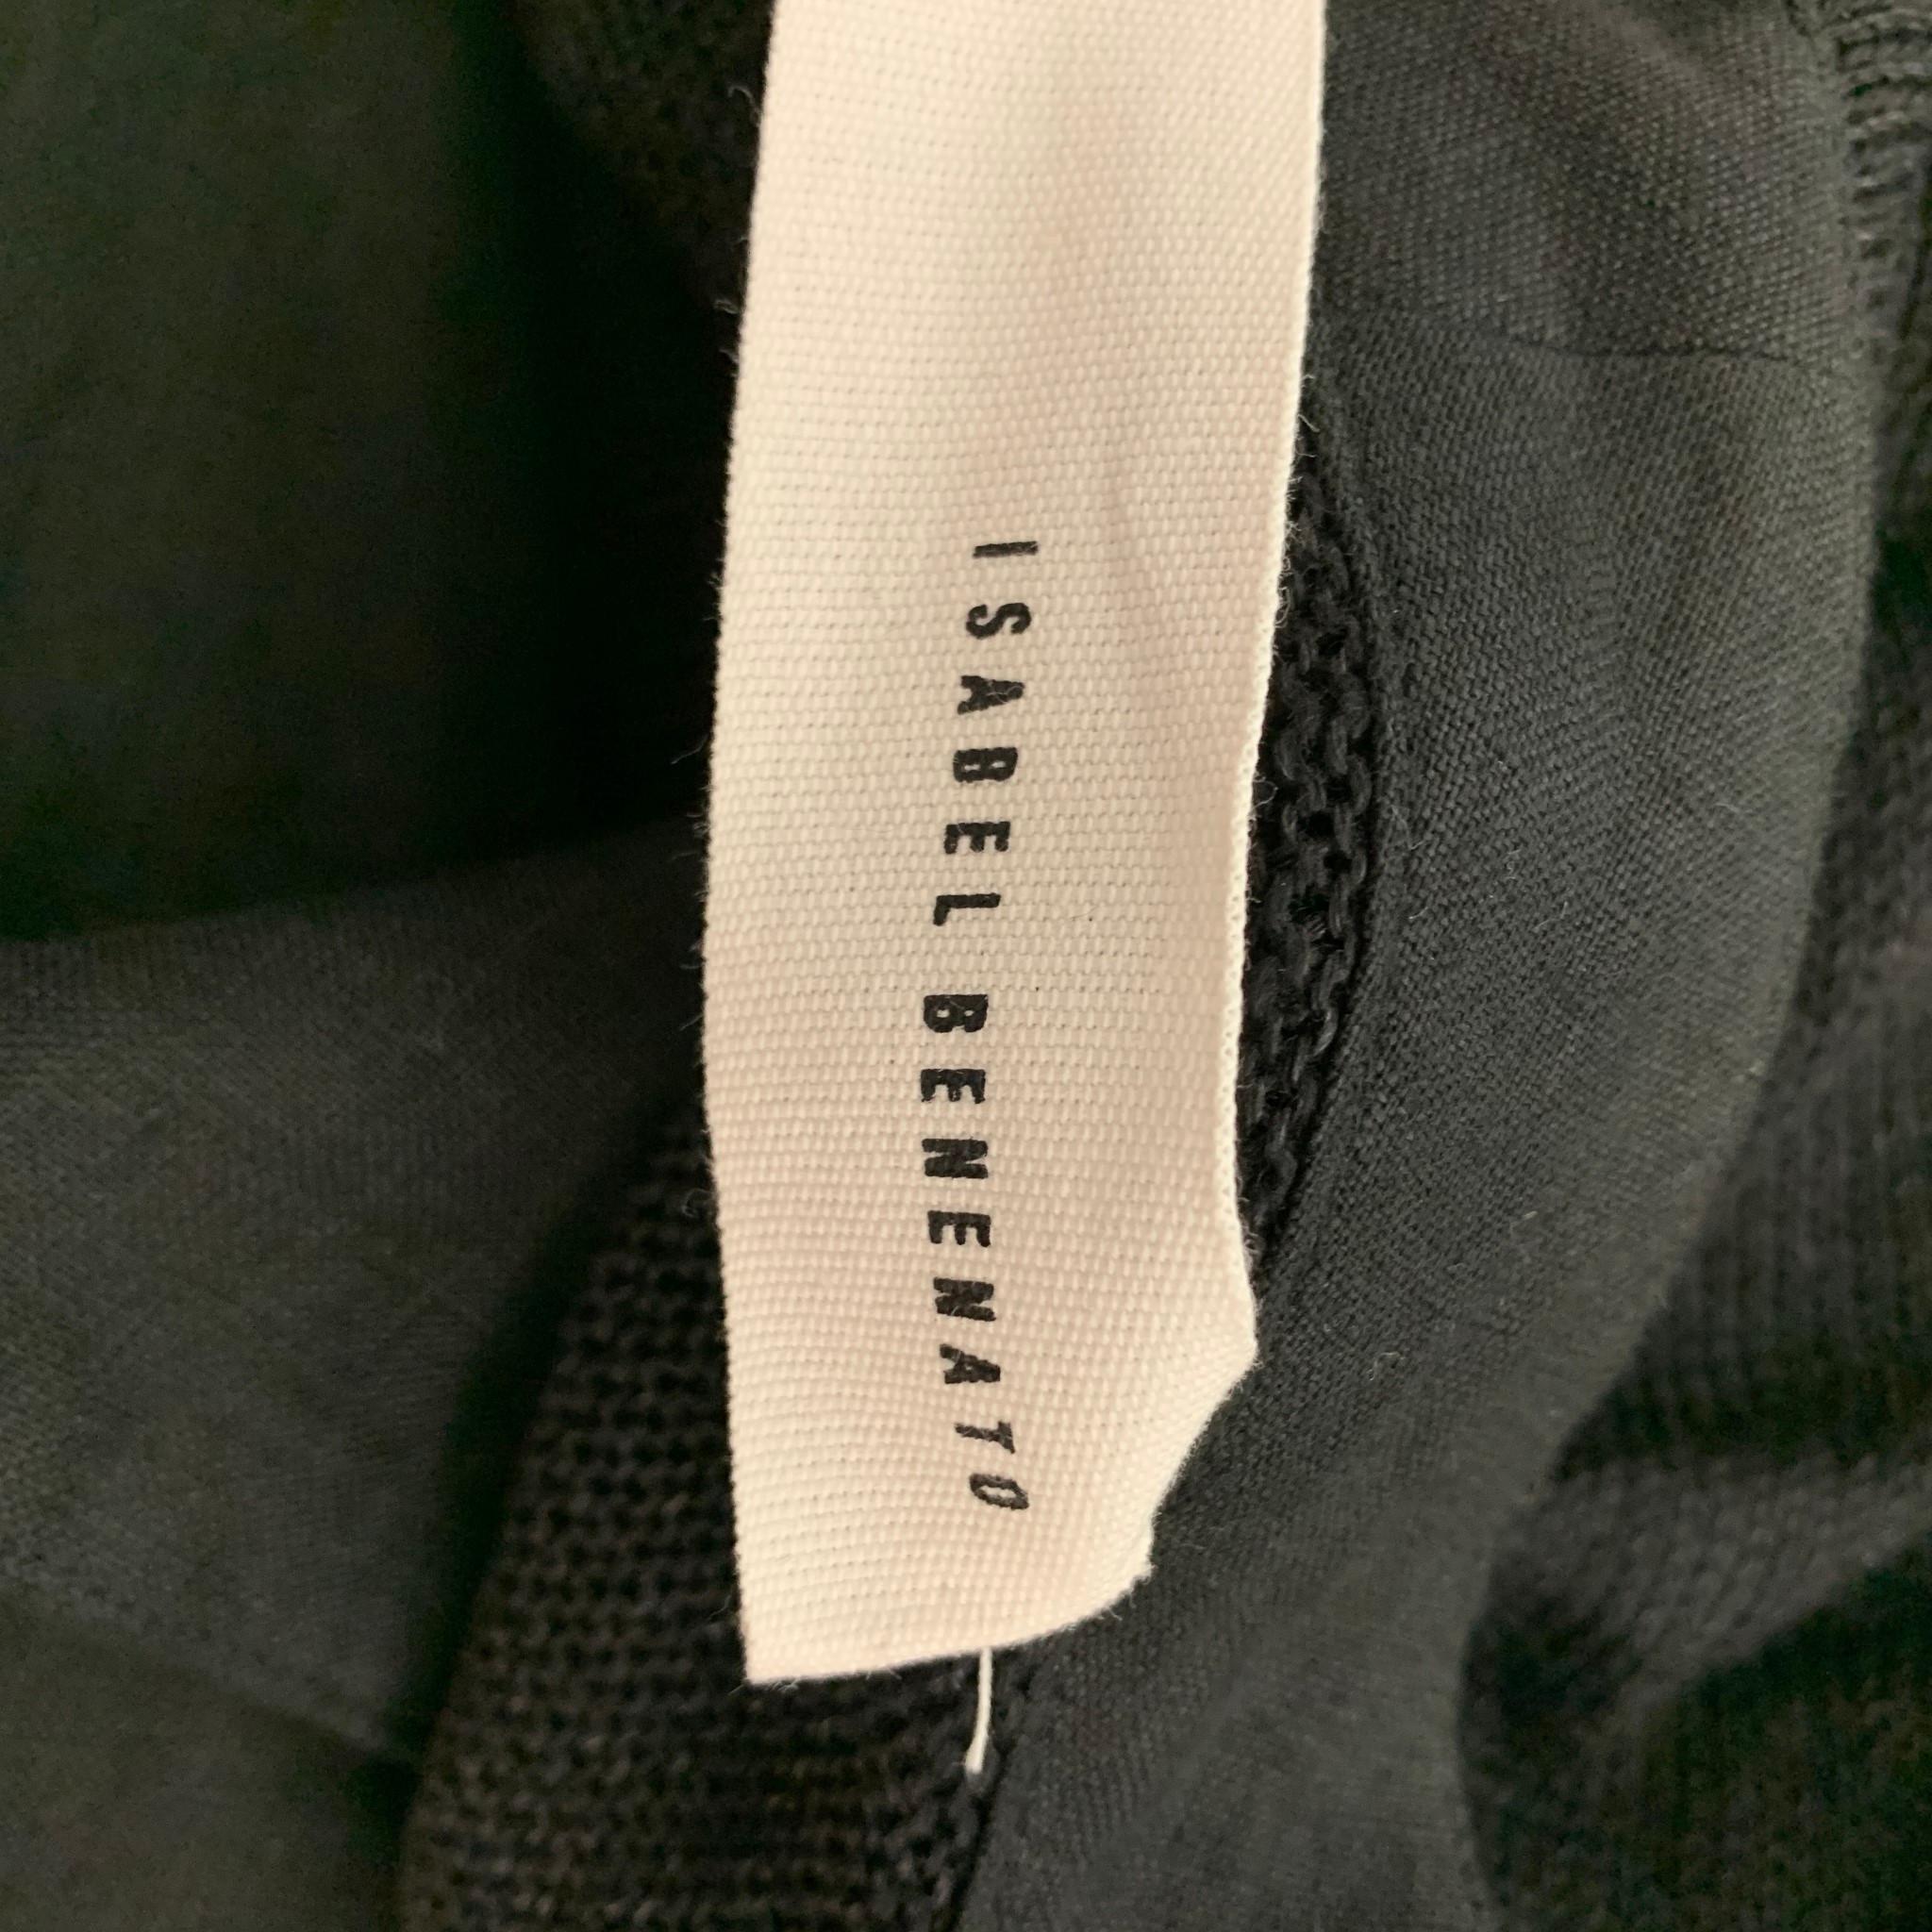 ISABEL BENENATO SS 17 Size 40 Black Mixed Fabrics Flax Jacket 1